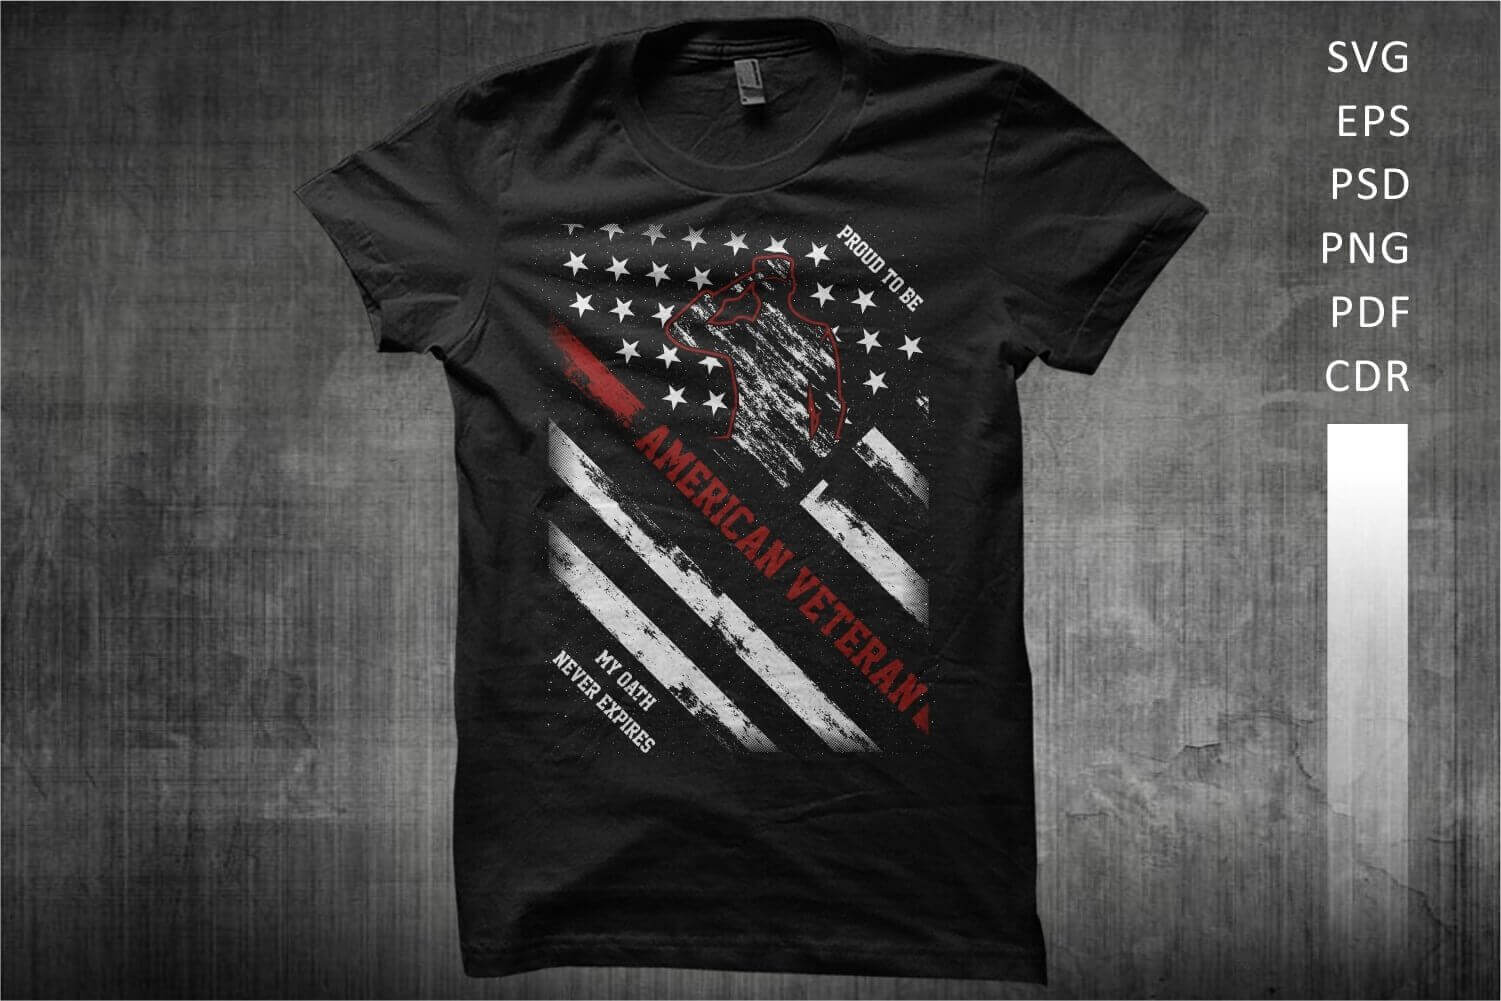 Black T-shirt with American flag and American Veteran slogan.